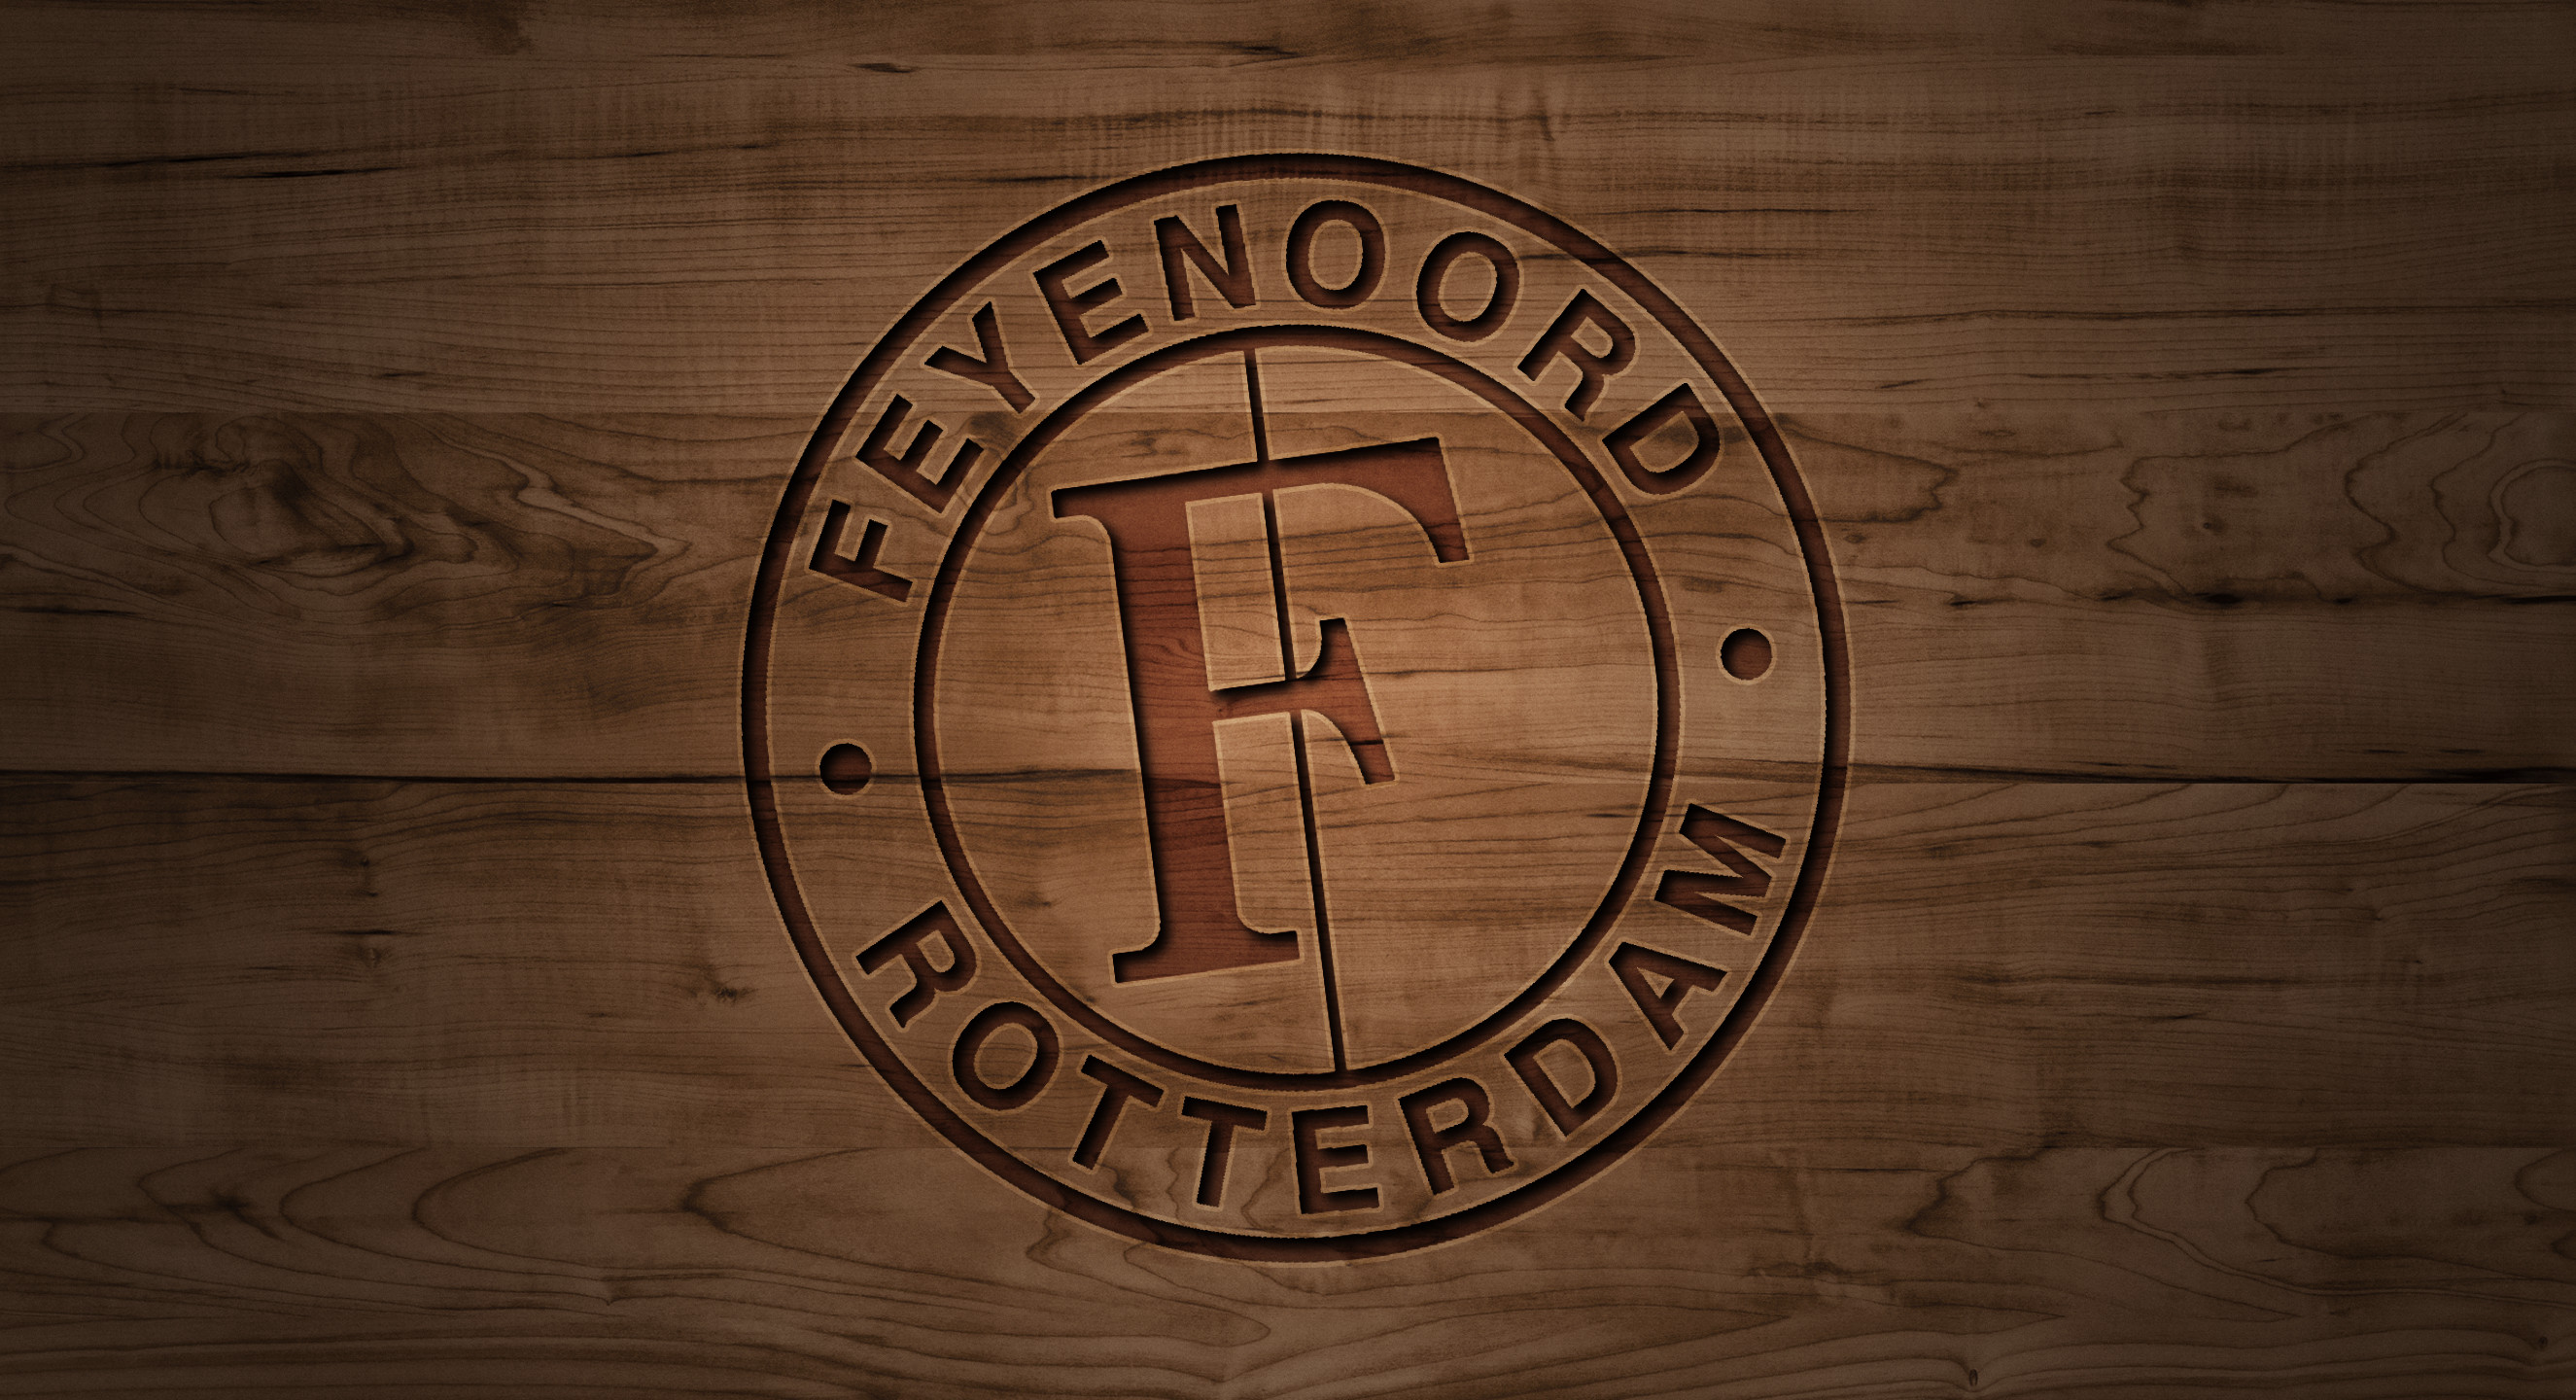 Sandkar's Feyenoordpage